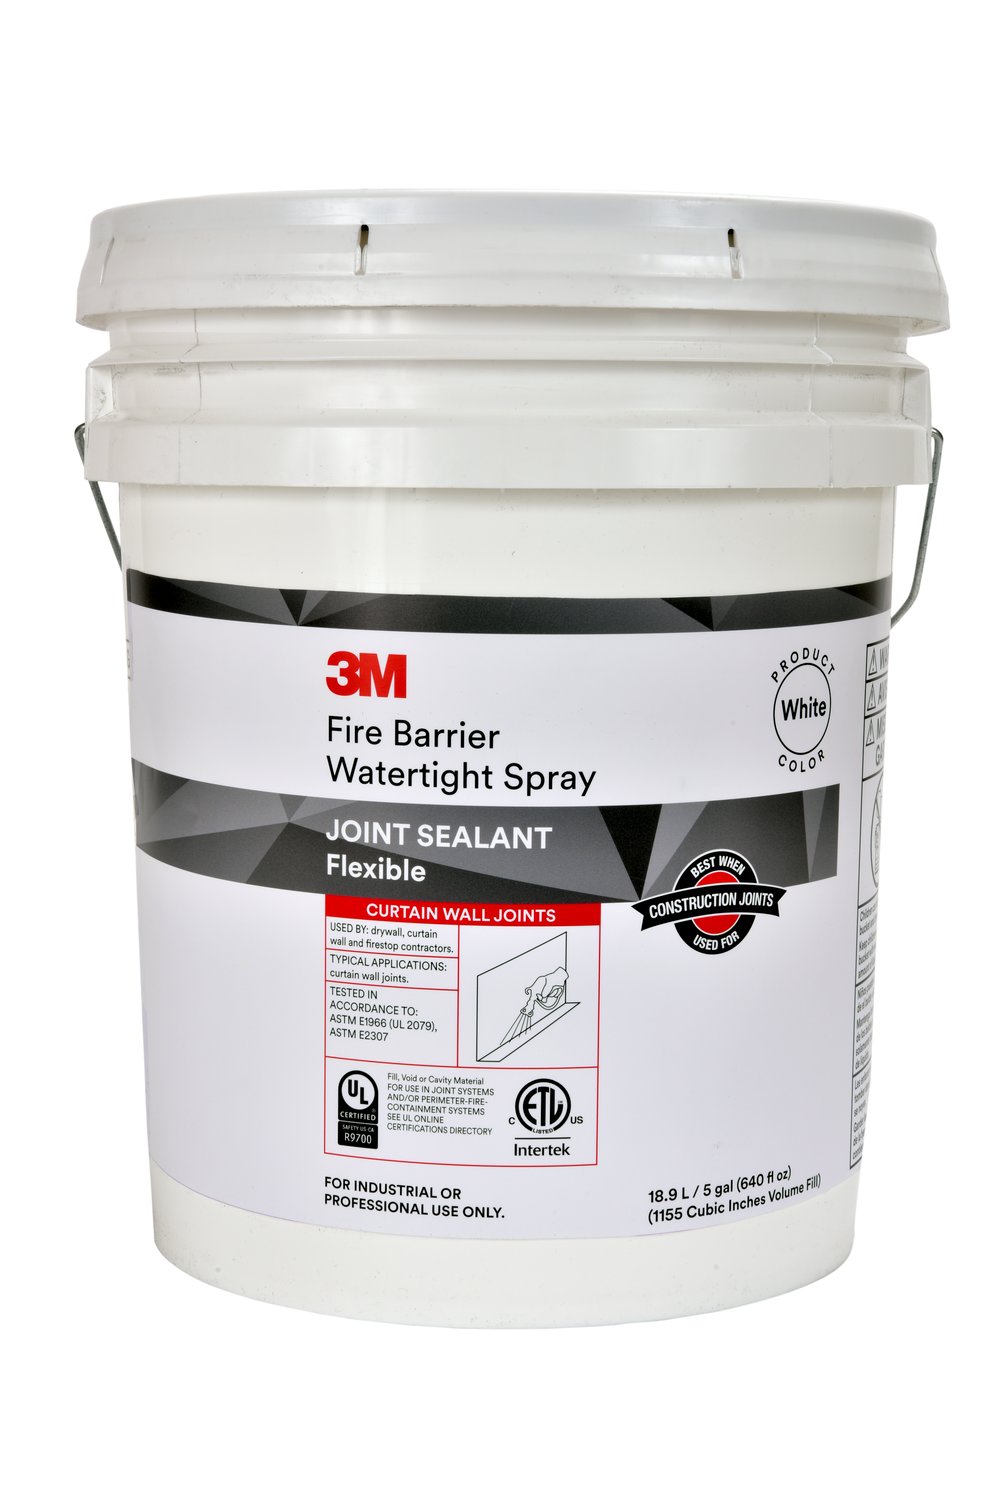 7100138396 - 3M Fire Barrier Water Tight Spray, White, 5 Gallon (Pail), Drum